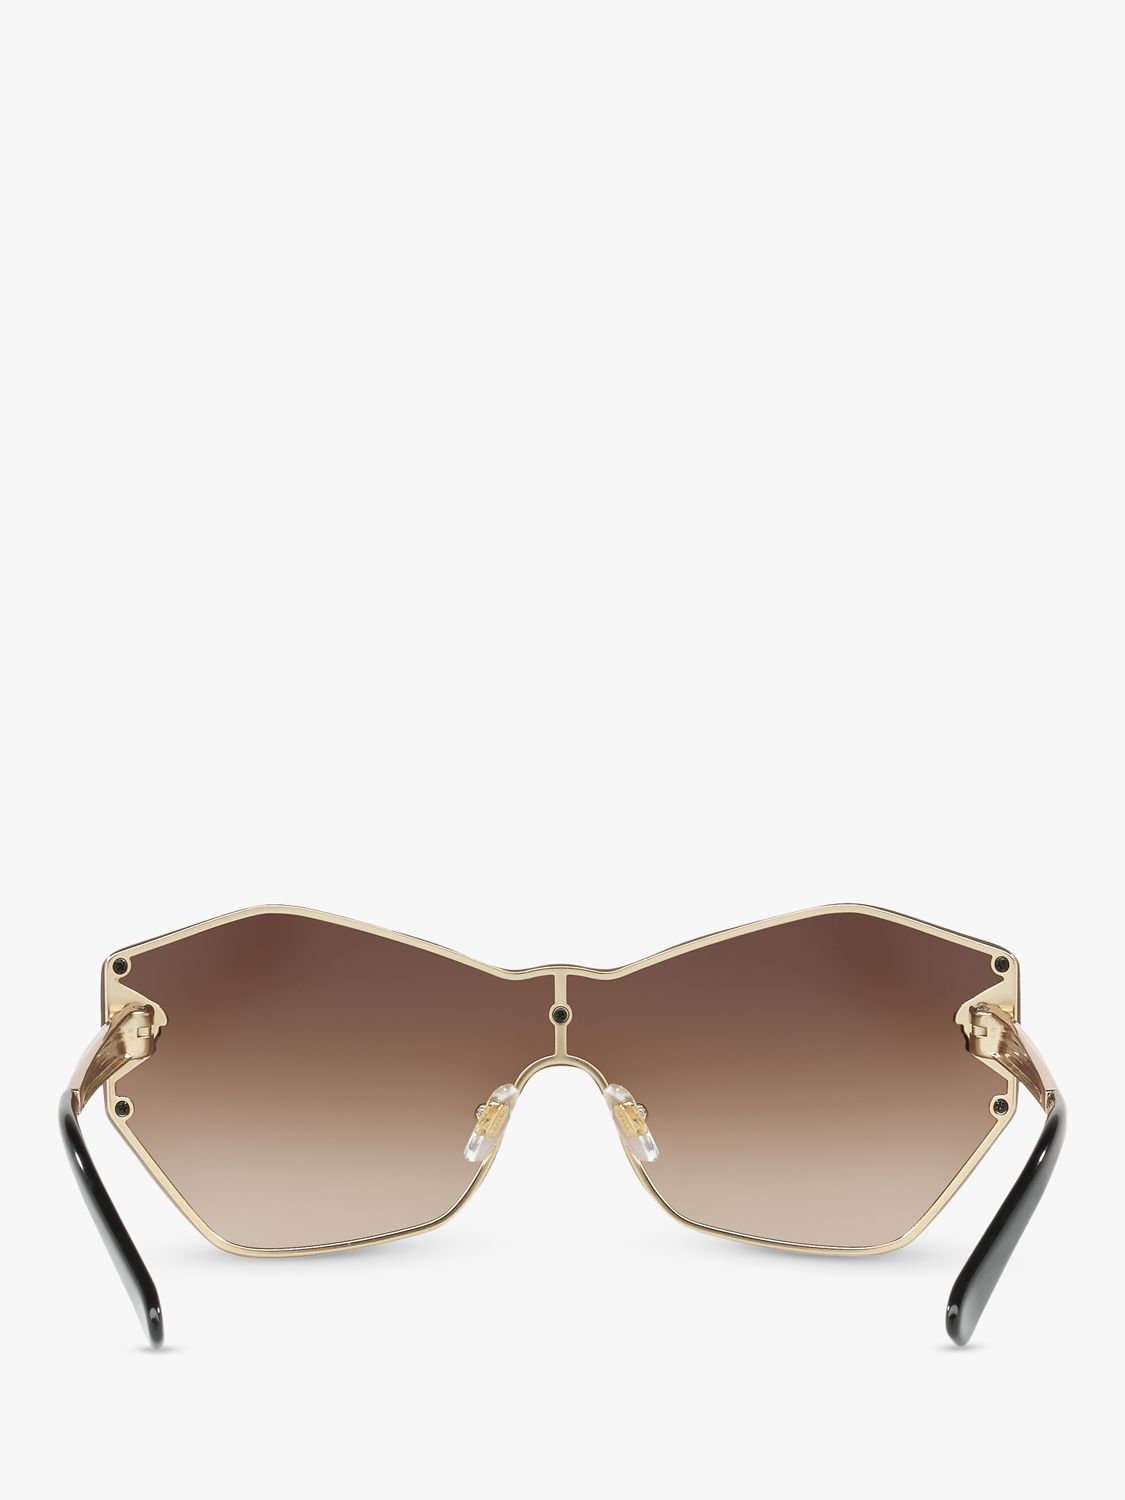 Versace VE2182 Women's Irreglar Sunglasses, Pale Gold/Brown Gradient